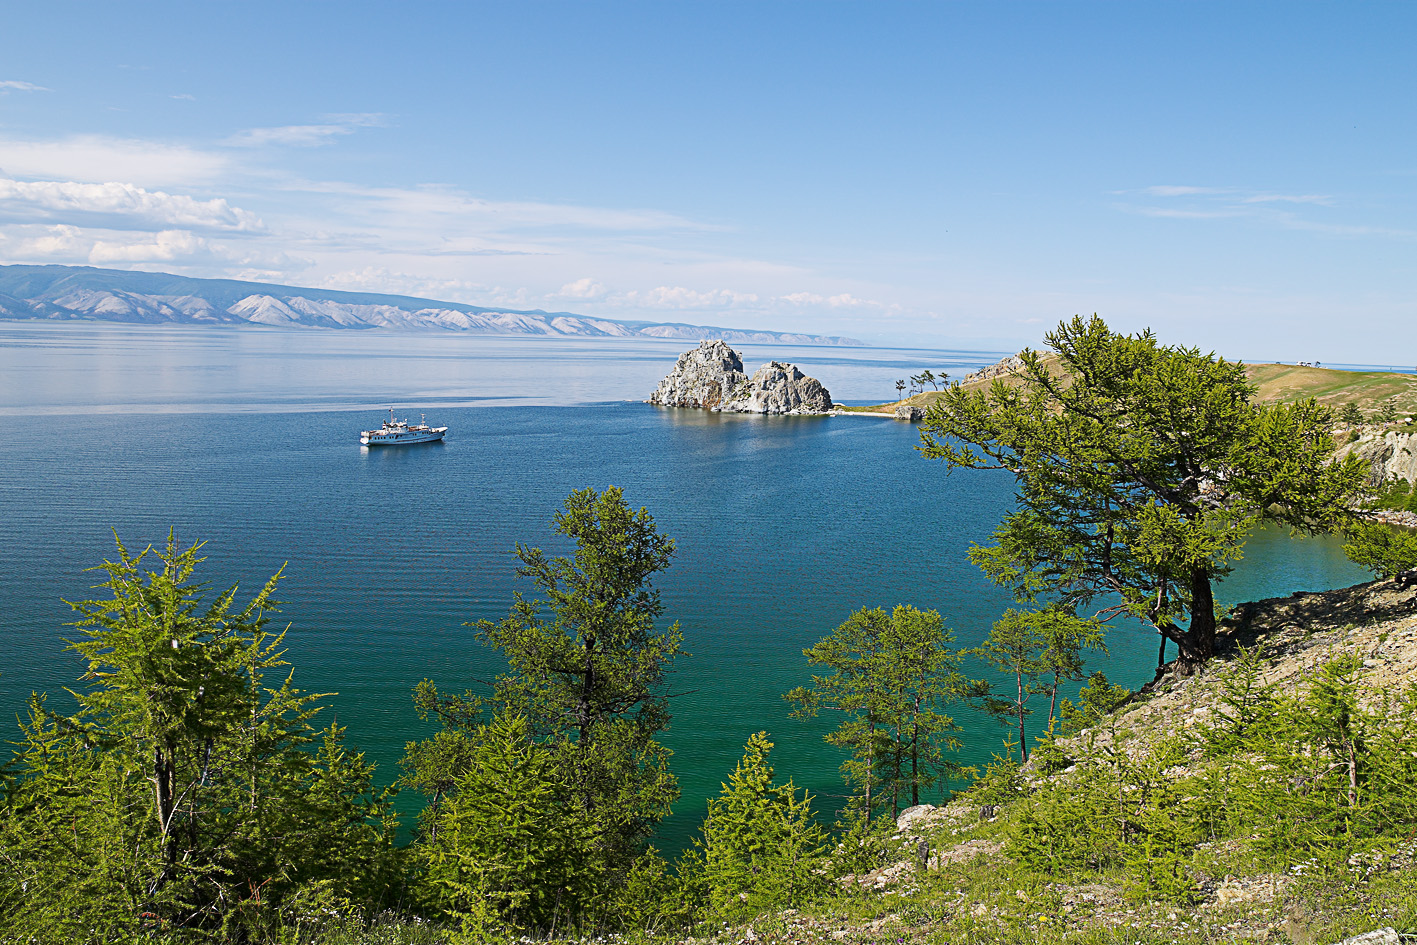 Озеро байкал знают во всем мире. Озеро Байкал, Восточная Сибирь. Остров Ольхон Восточная Сибирь. Байкал пресноводное озеро. Жемчужина Бурятии озеро Байкал.